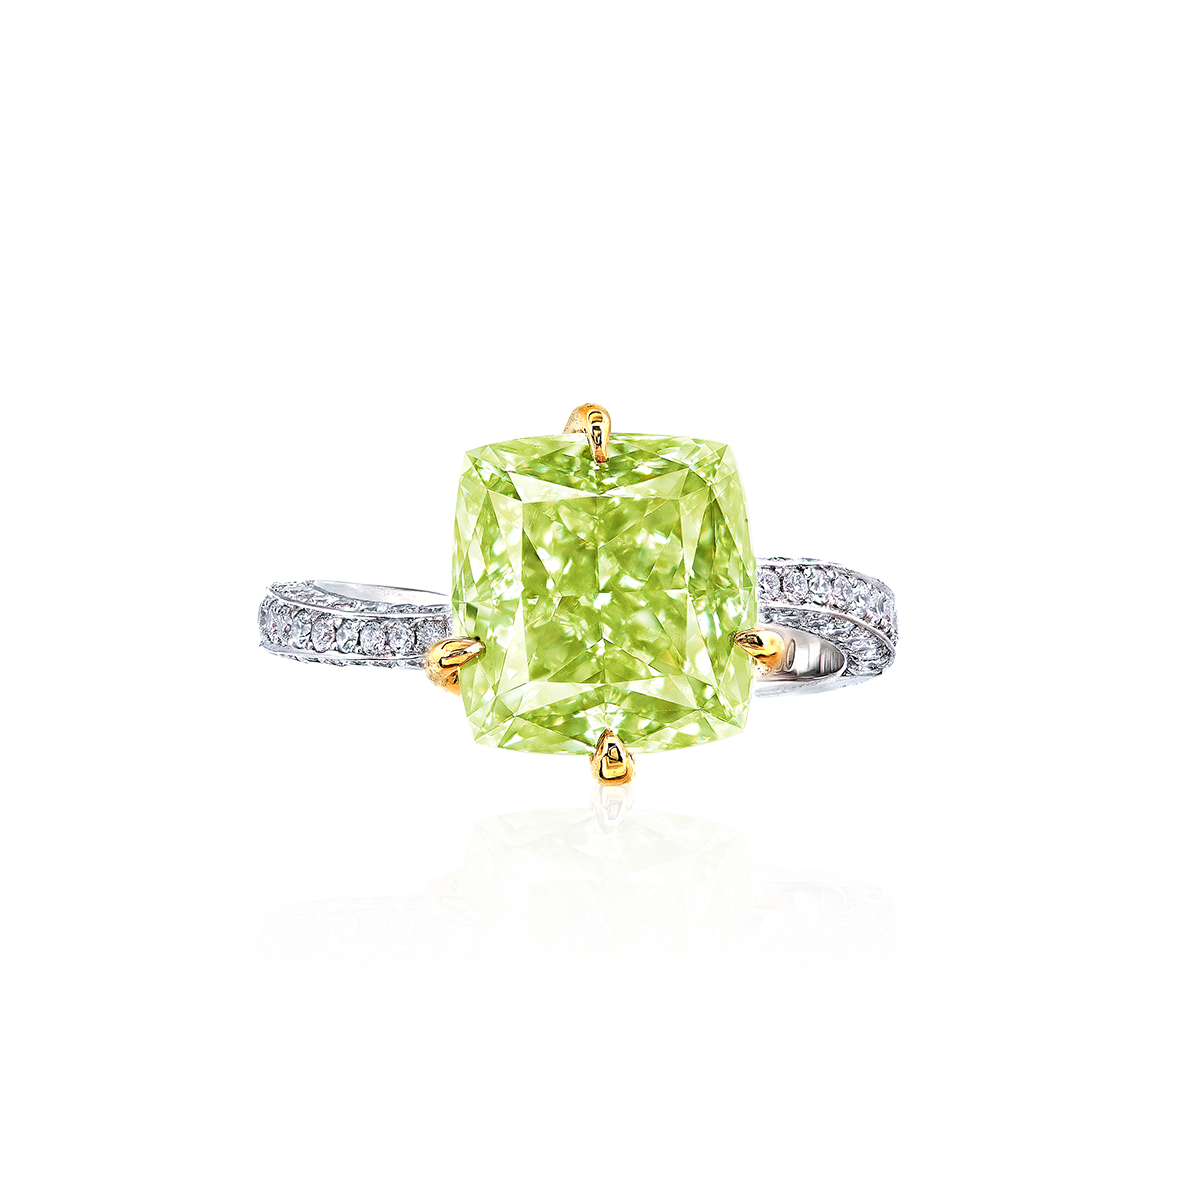 GIA 5.16 克拉 濃彩黃綠彩鑽鑽戒
FANCY INTENSE YELLOW-GREEN 
DIAMOND AND DIAMOND RING